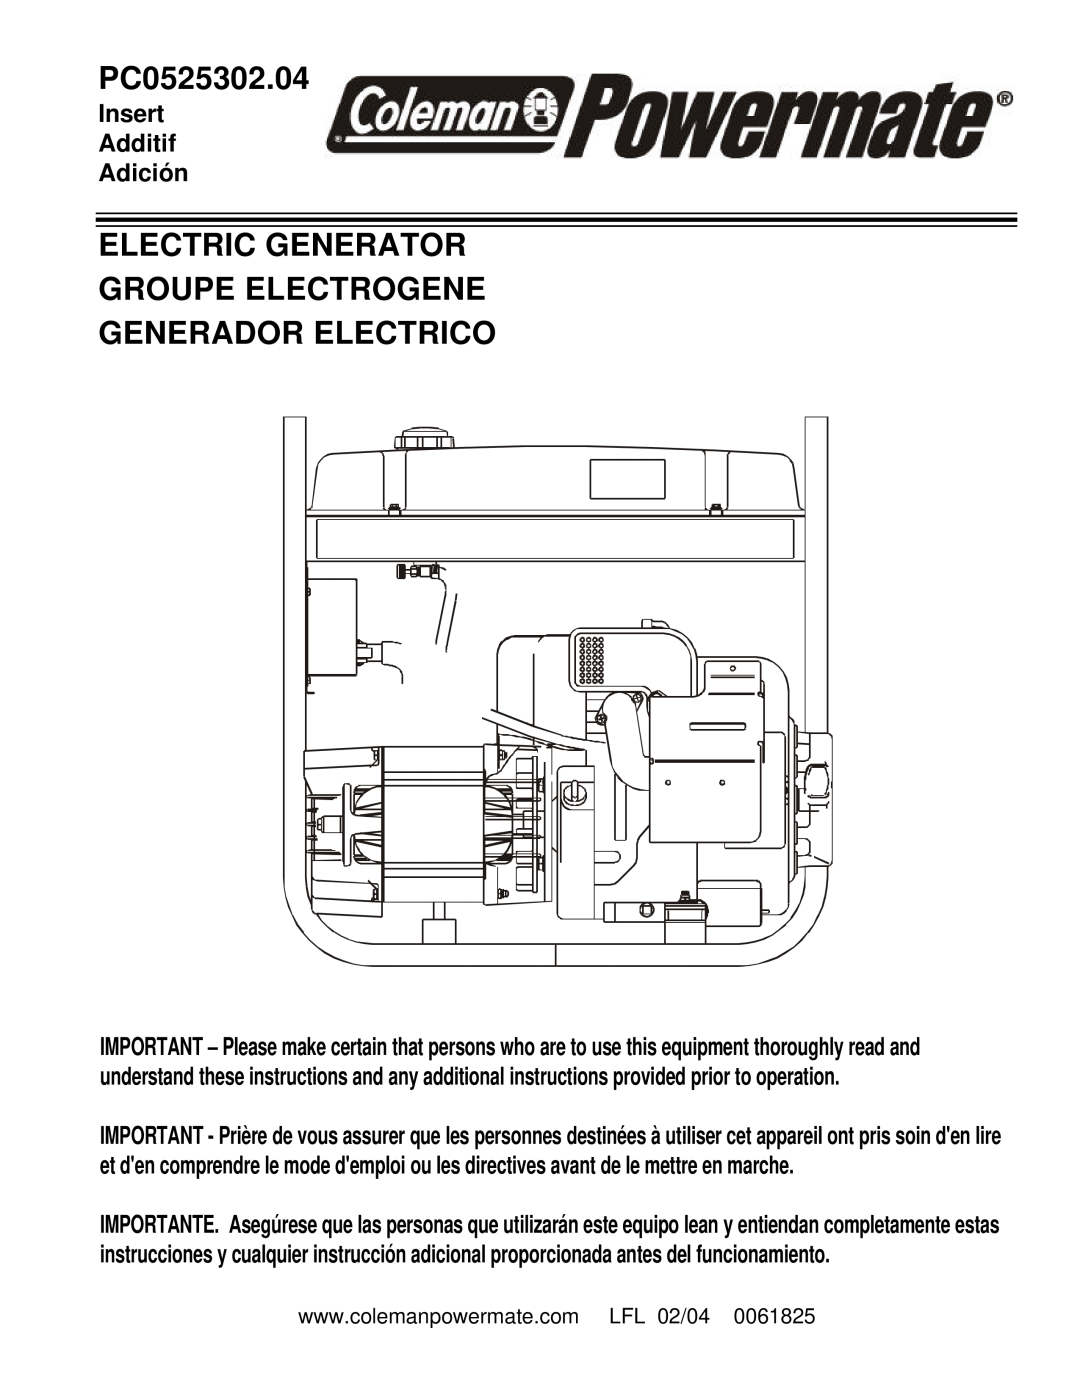 Powermate PC0525302.04 manual Electric Generator Groupe Electrogene Generador Electrico, Insert Additif Adición 